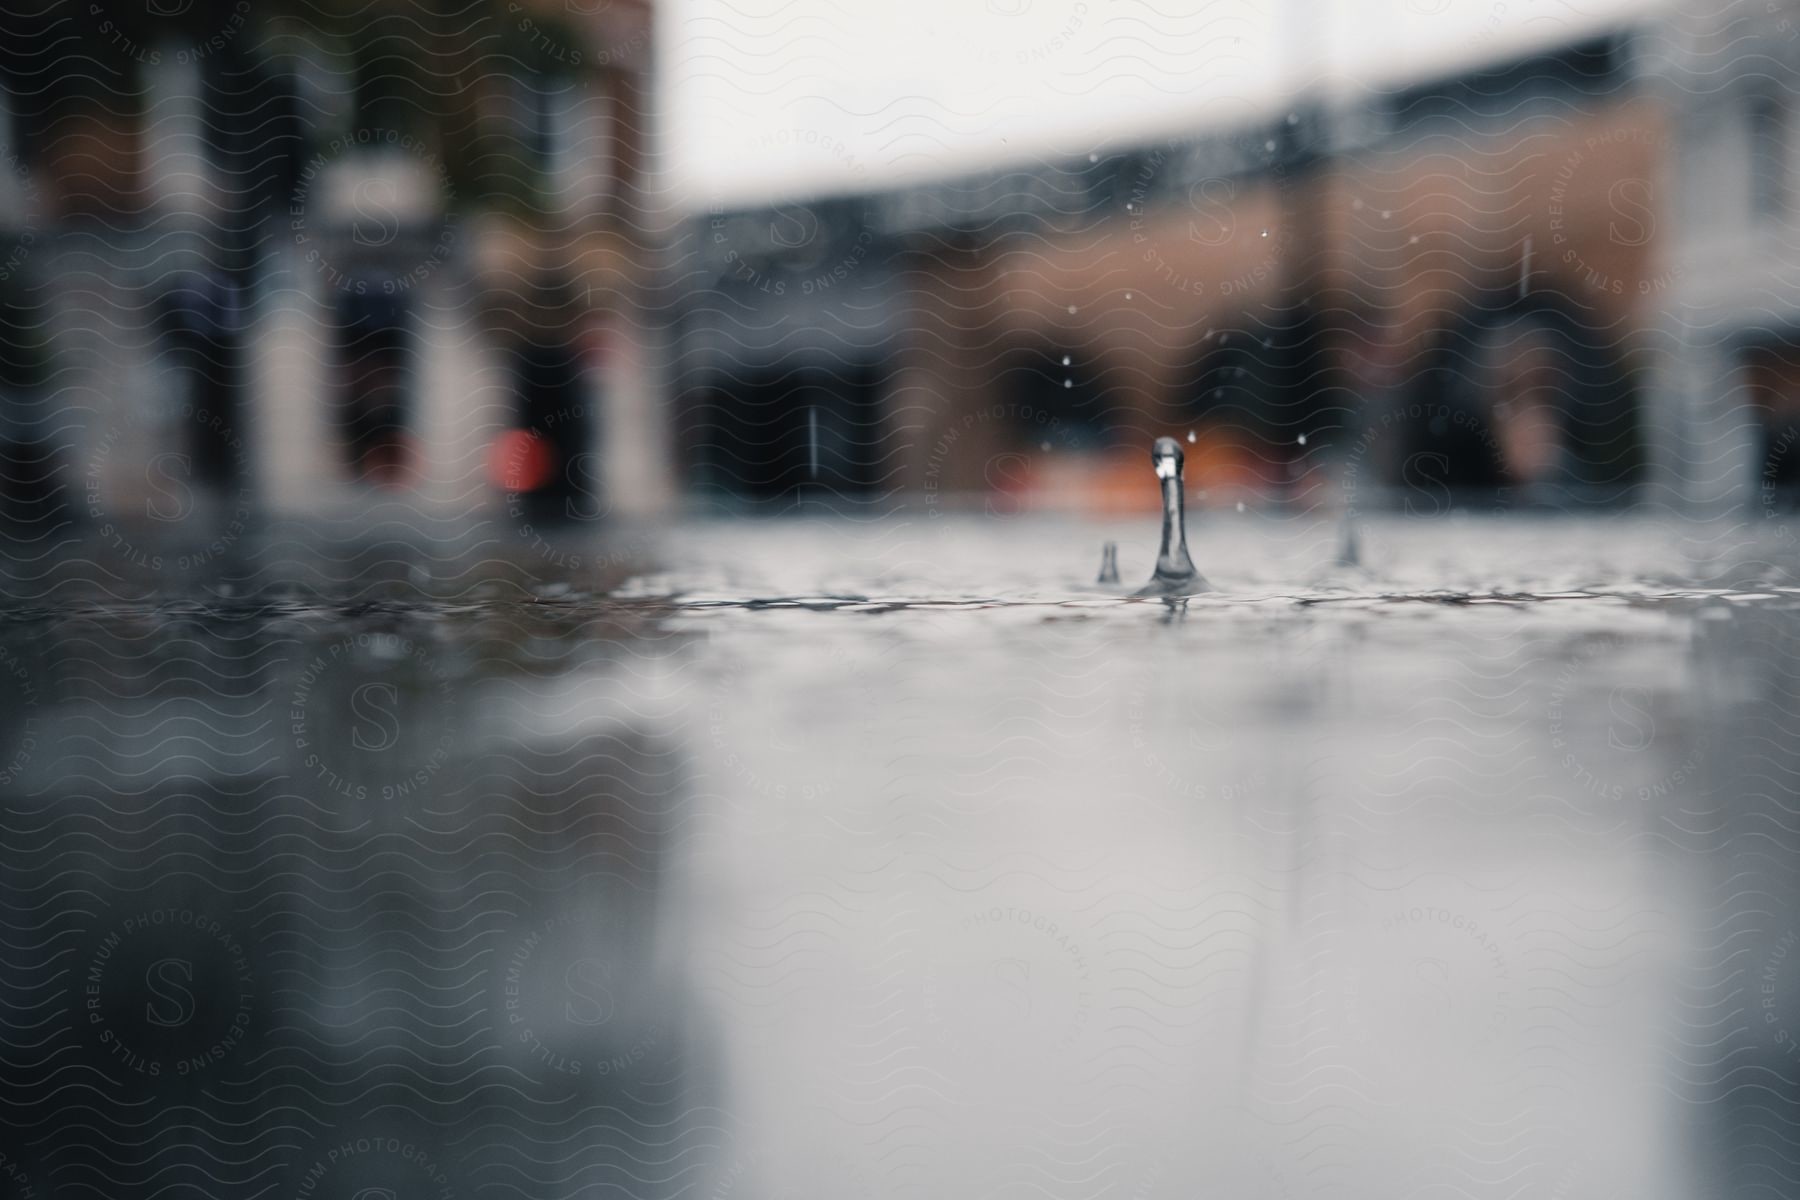 Rain droplets splashing onto a city street.